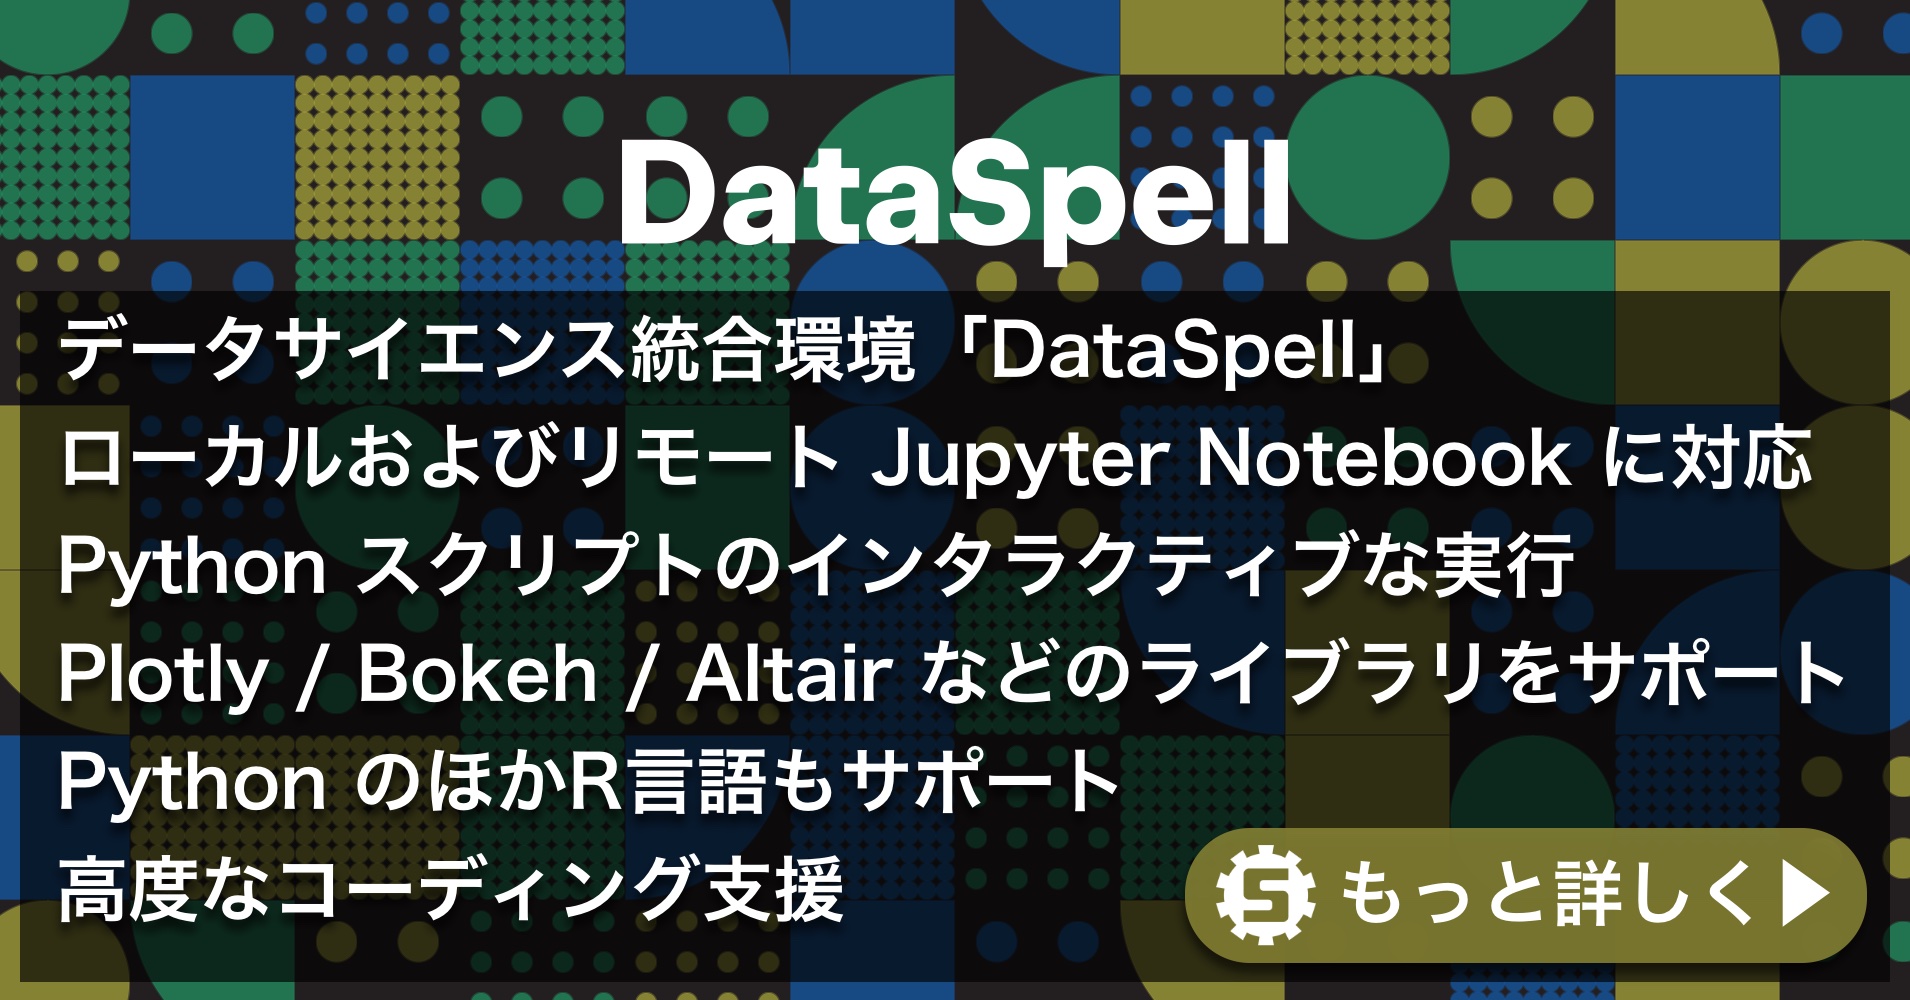 DataSpell の主な機能